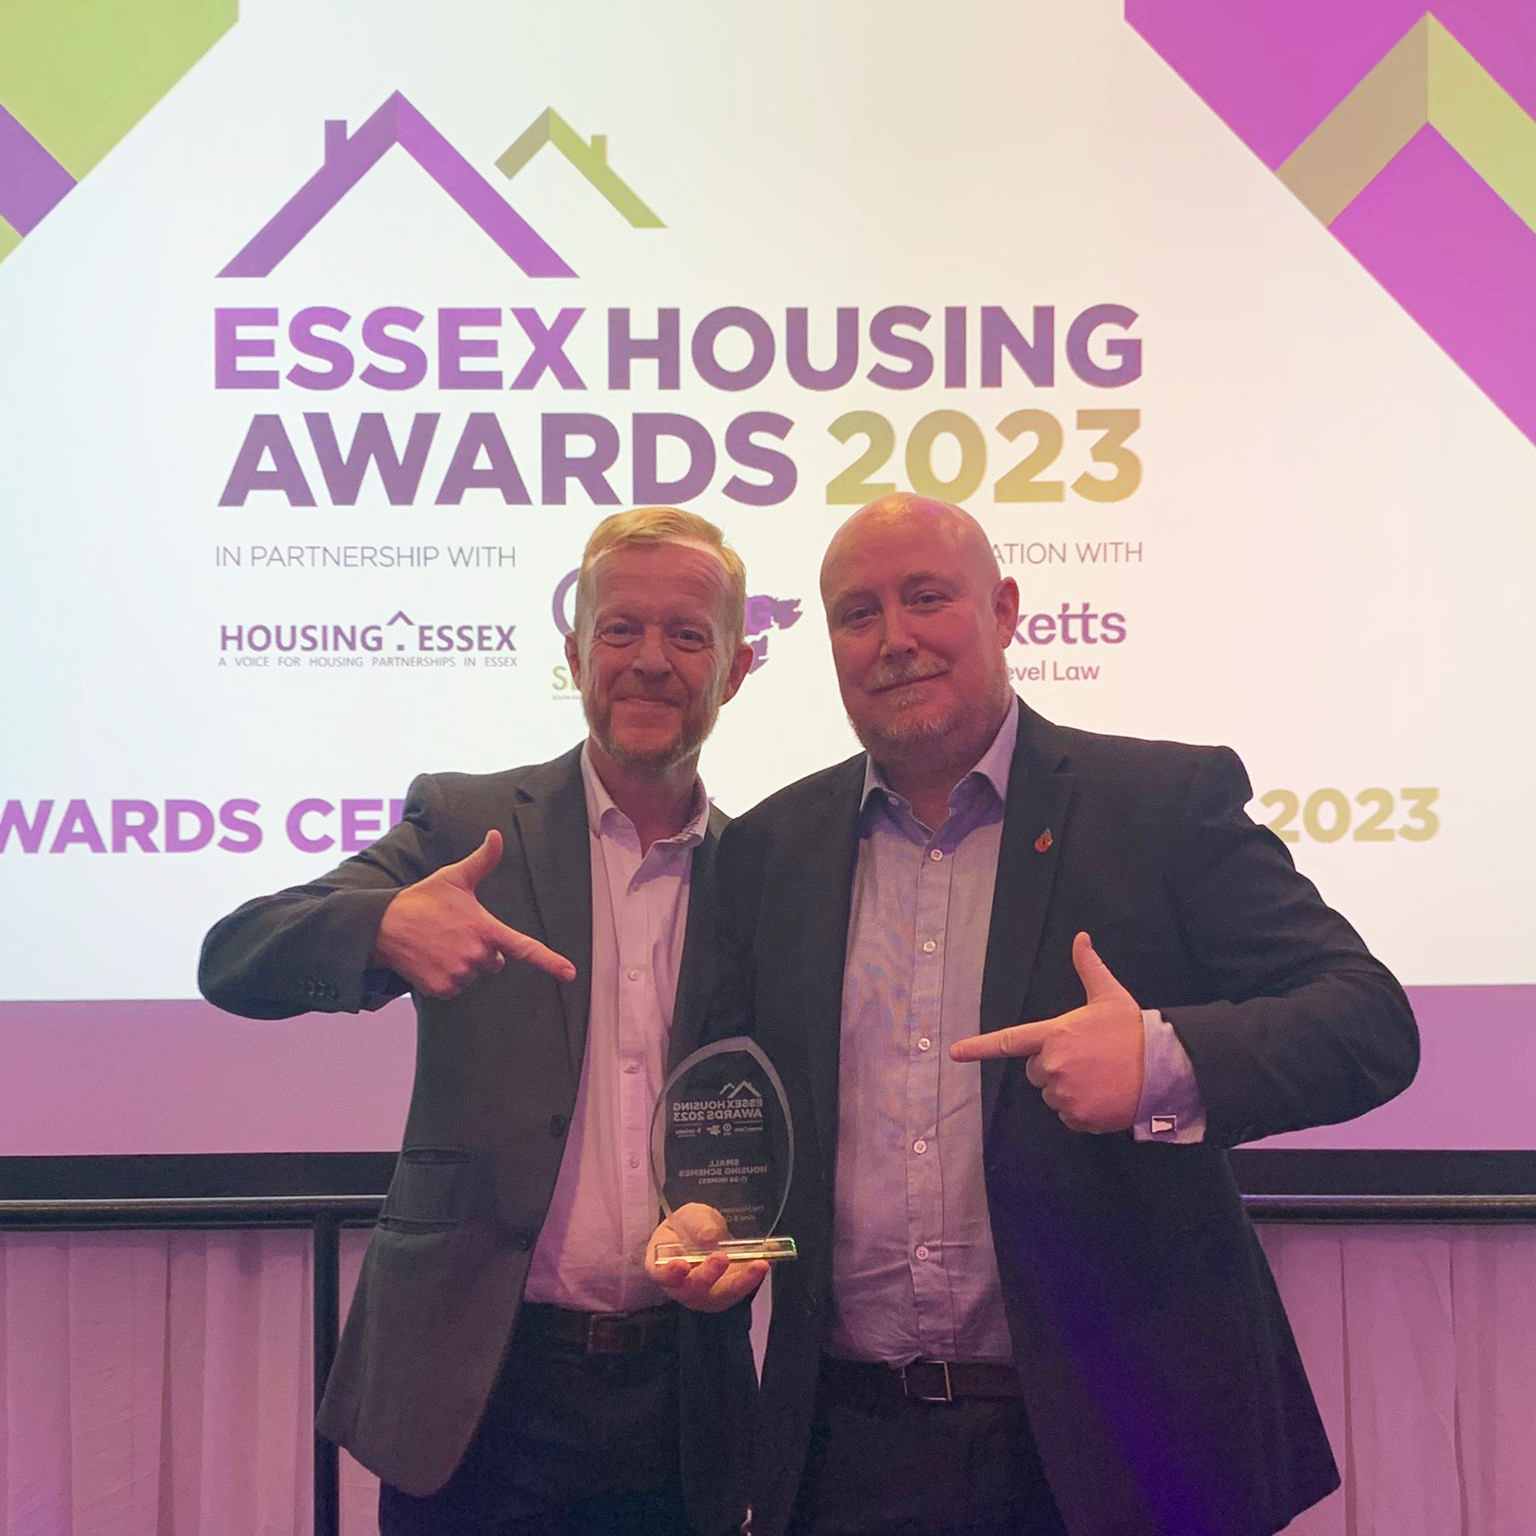 Essex Housing Awards 2023 image